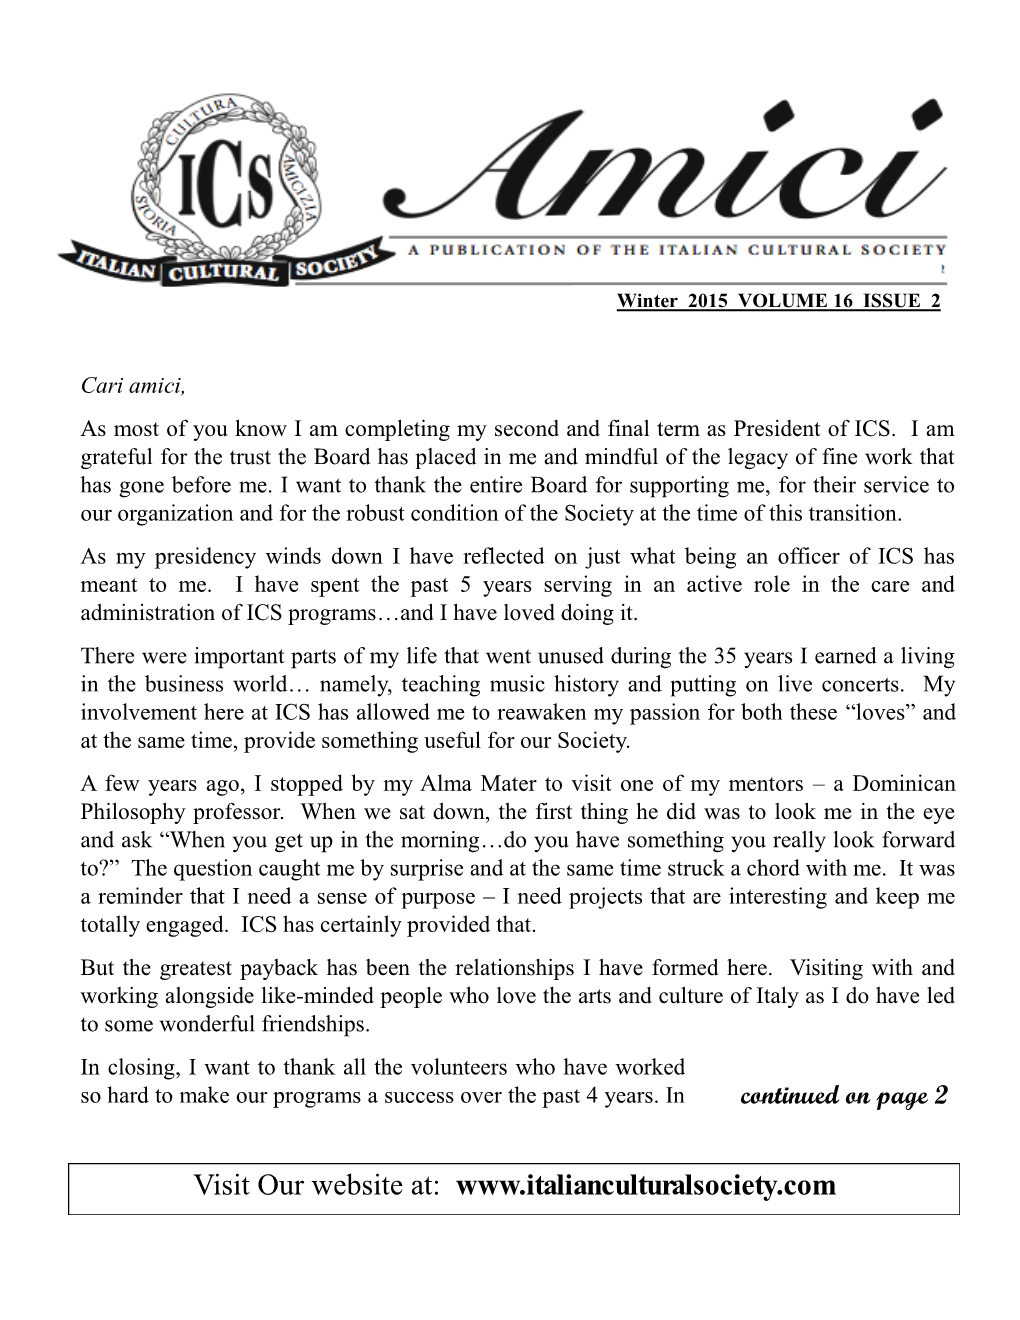 AMICI Volume 16 Issue 2